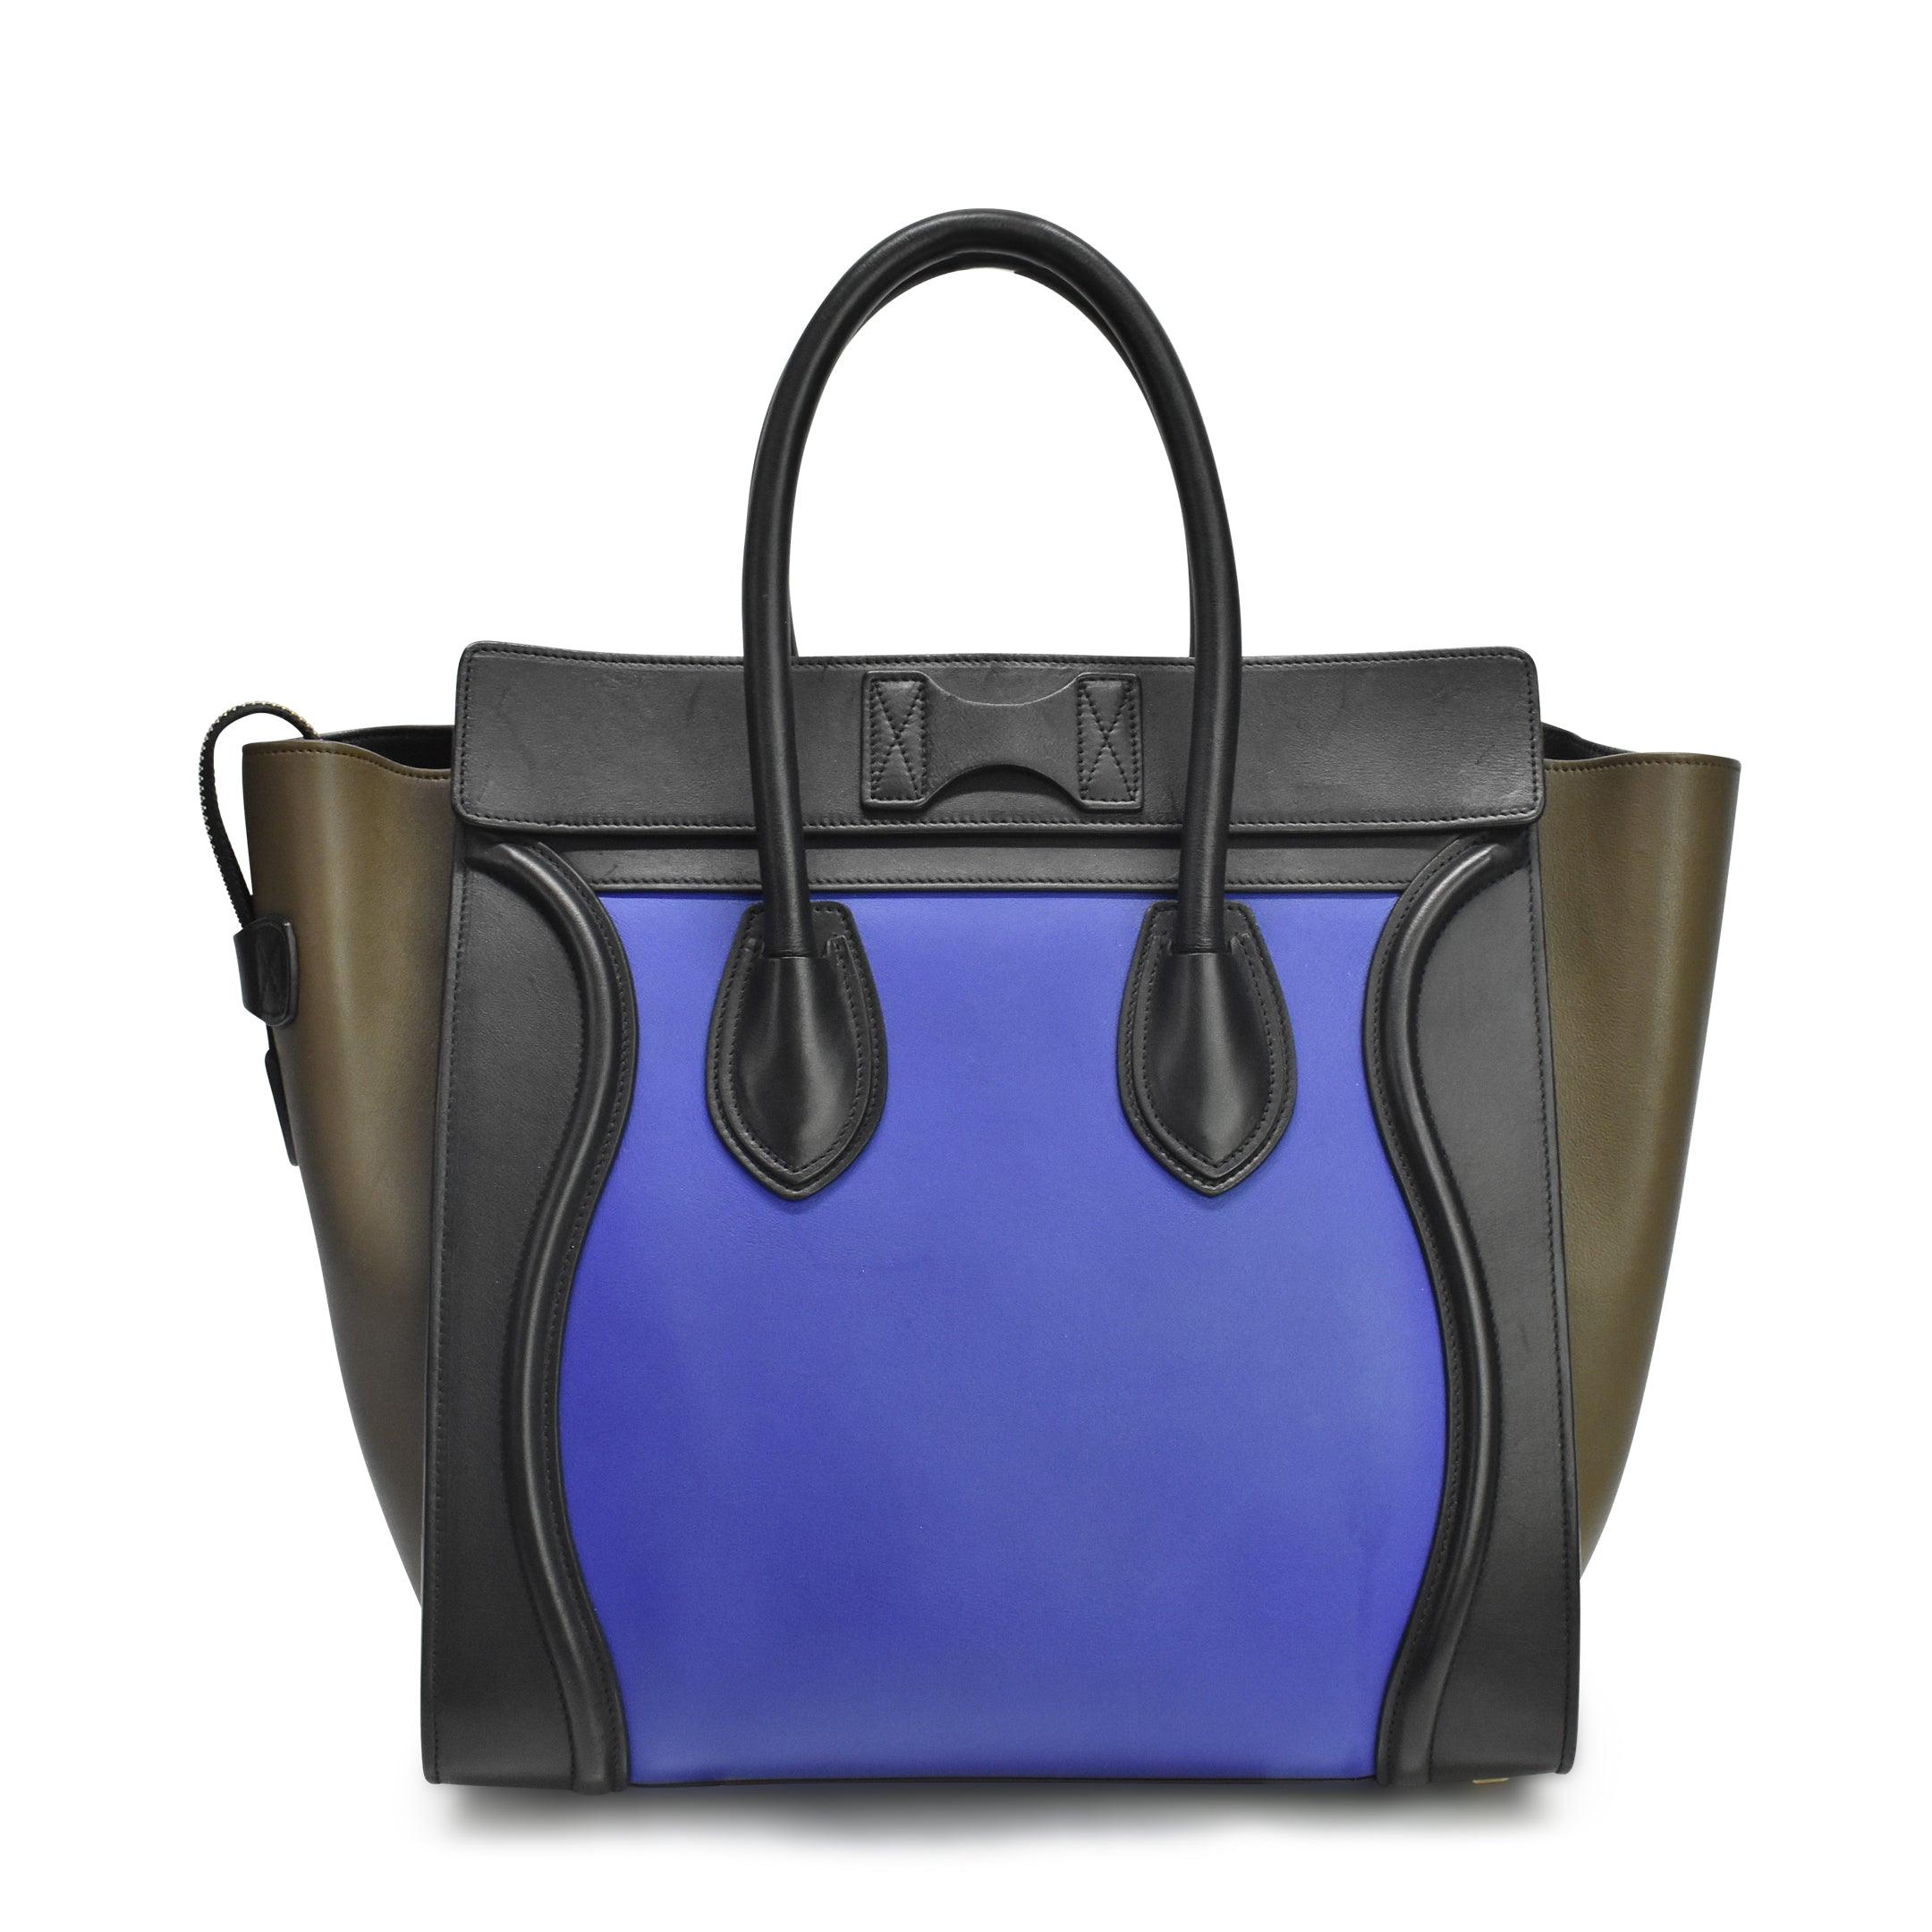 Celine 'Mini Luggage Trio' Bag - Fashionably Yours